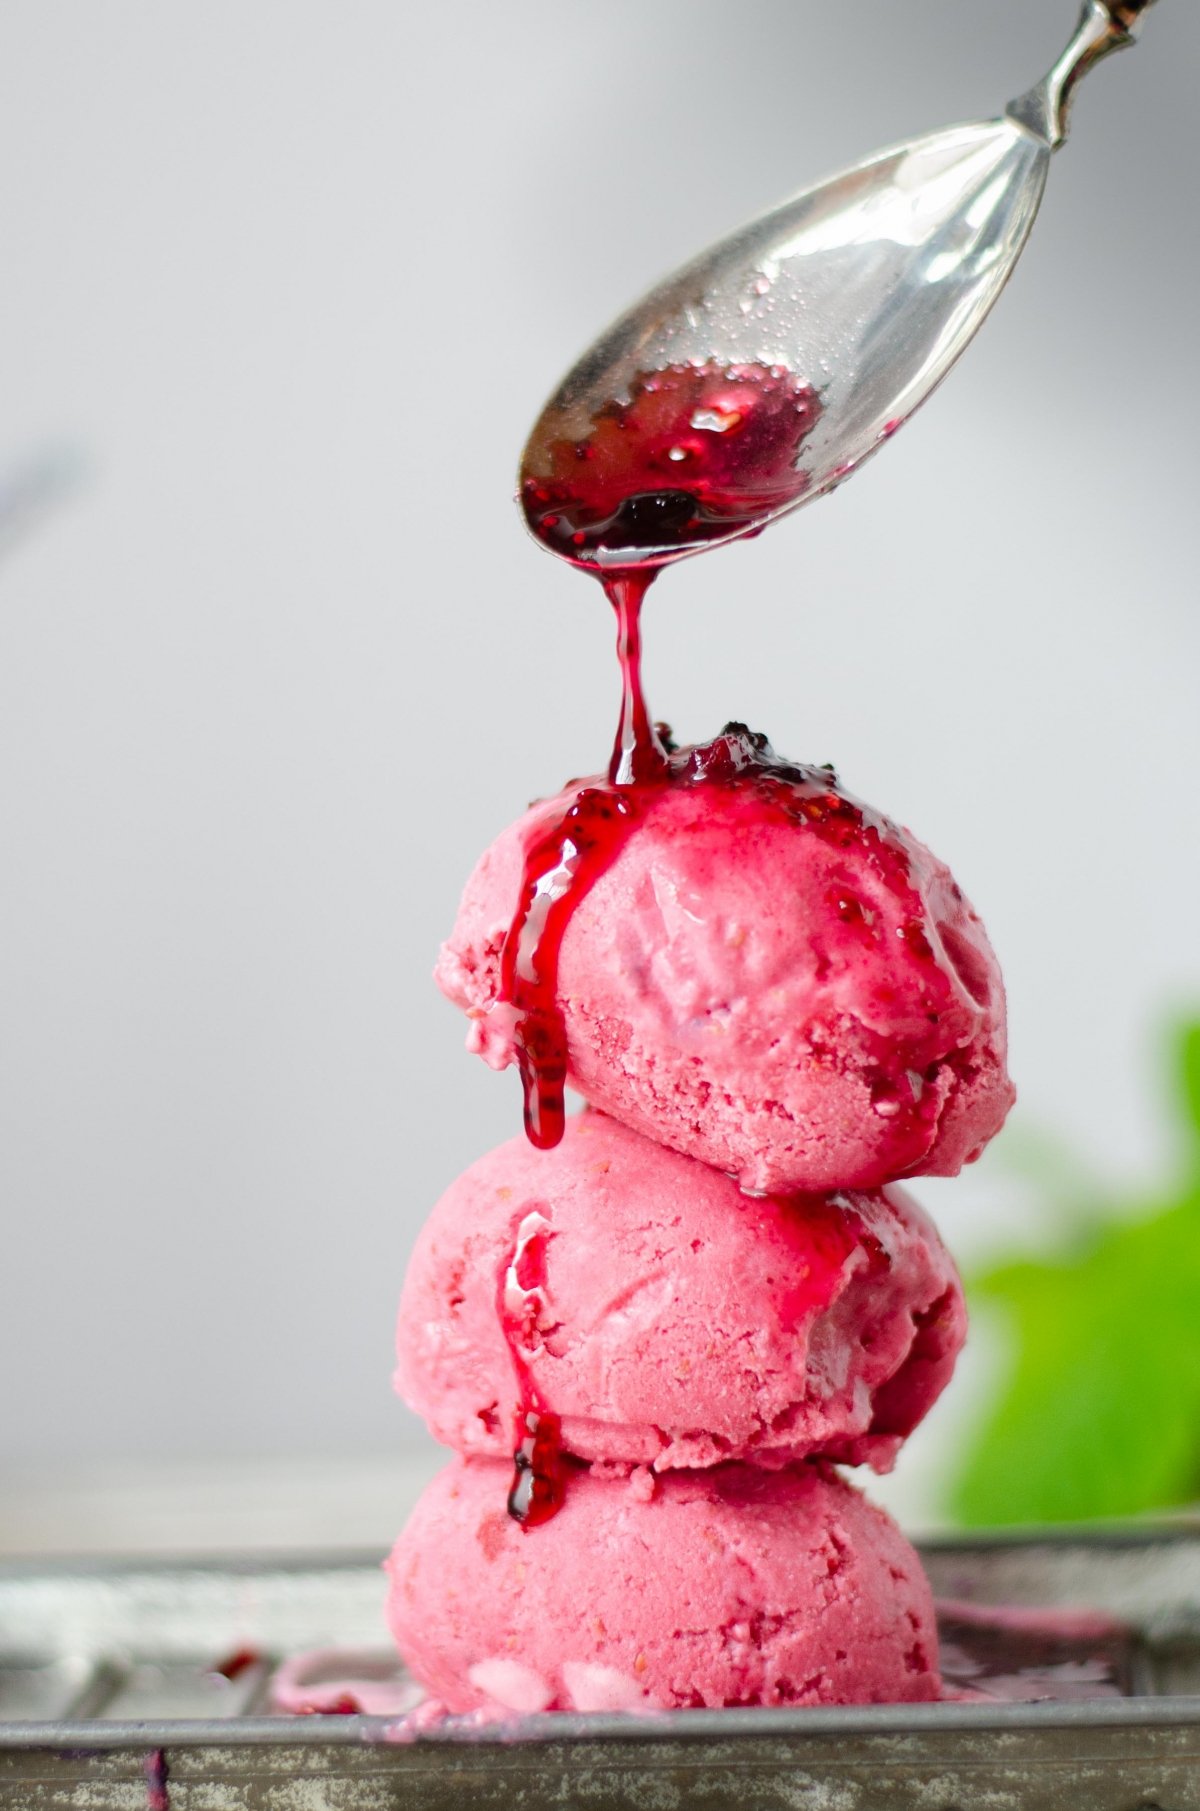 Raspberry ice cream with syrup